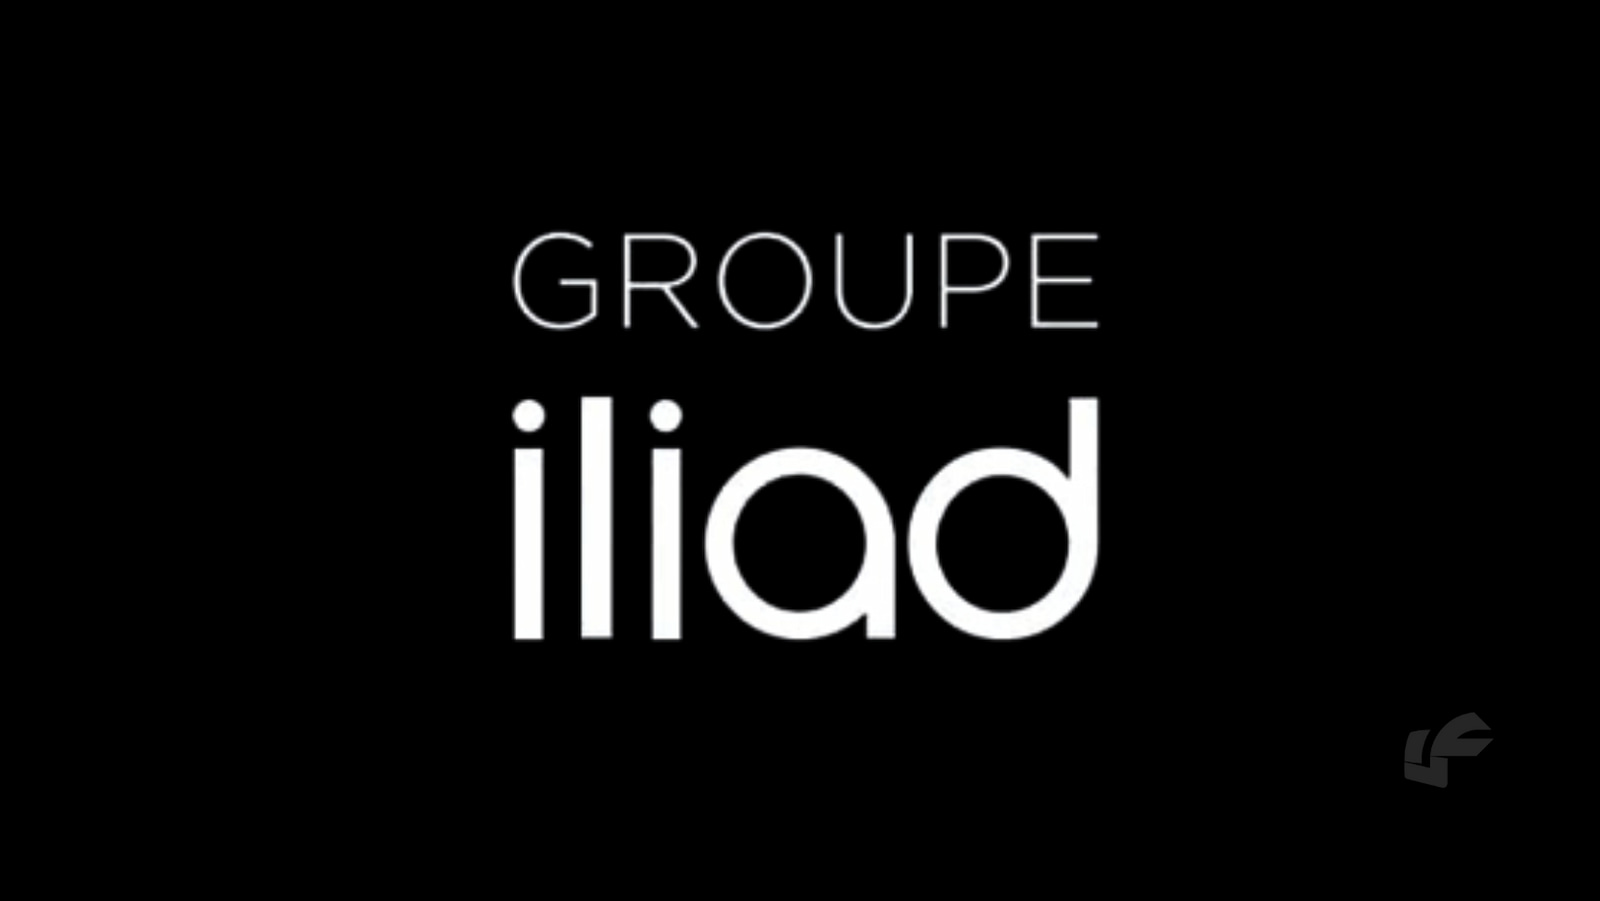 Gruppo iliad - Groupe iliad